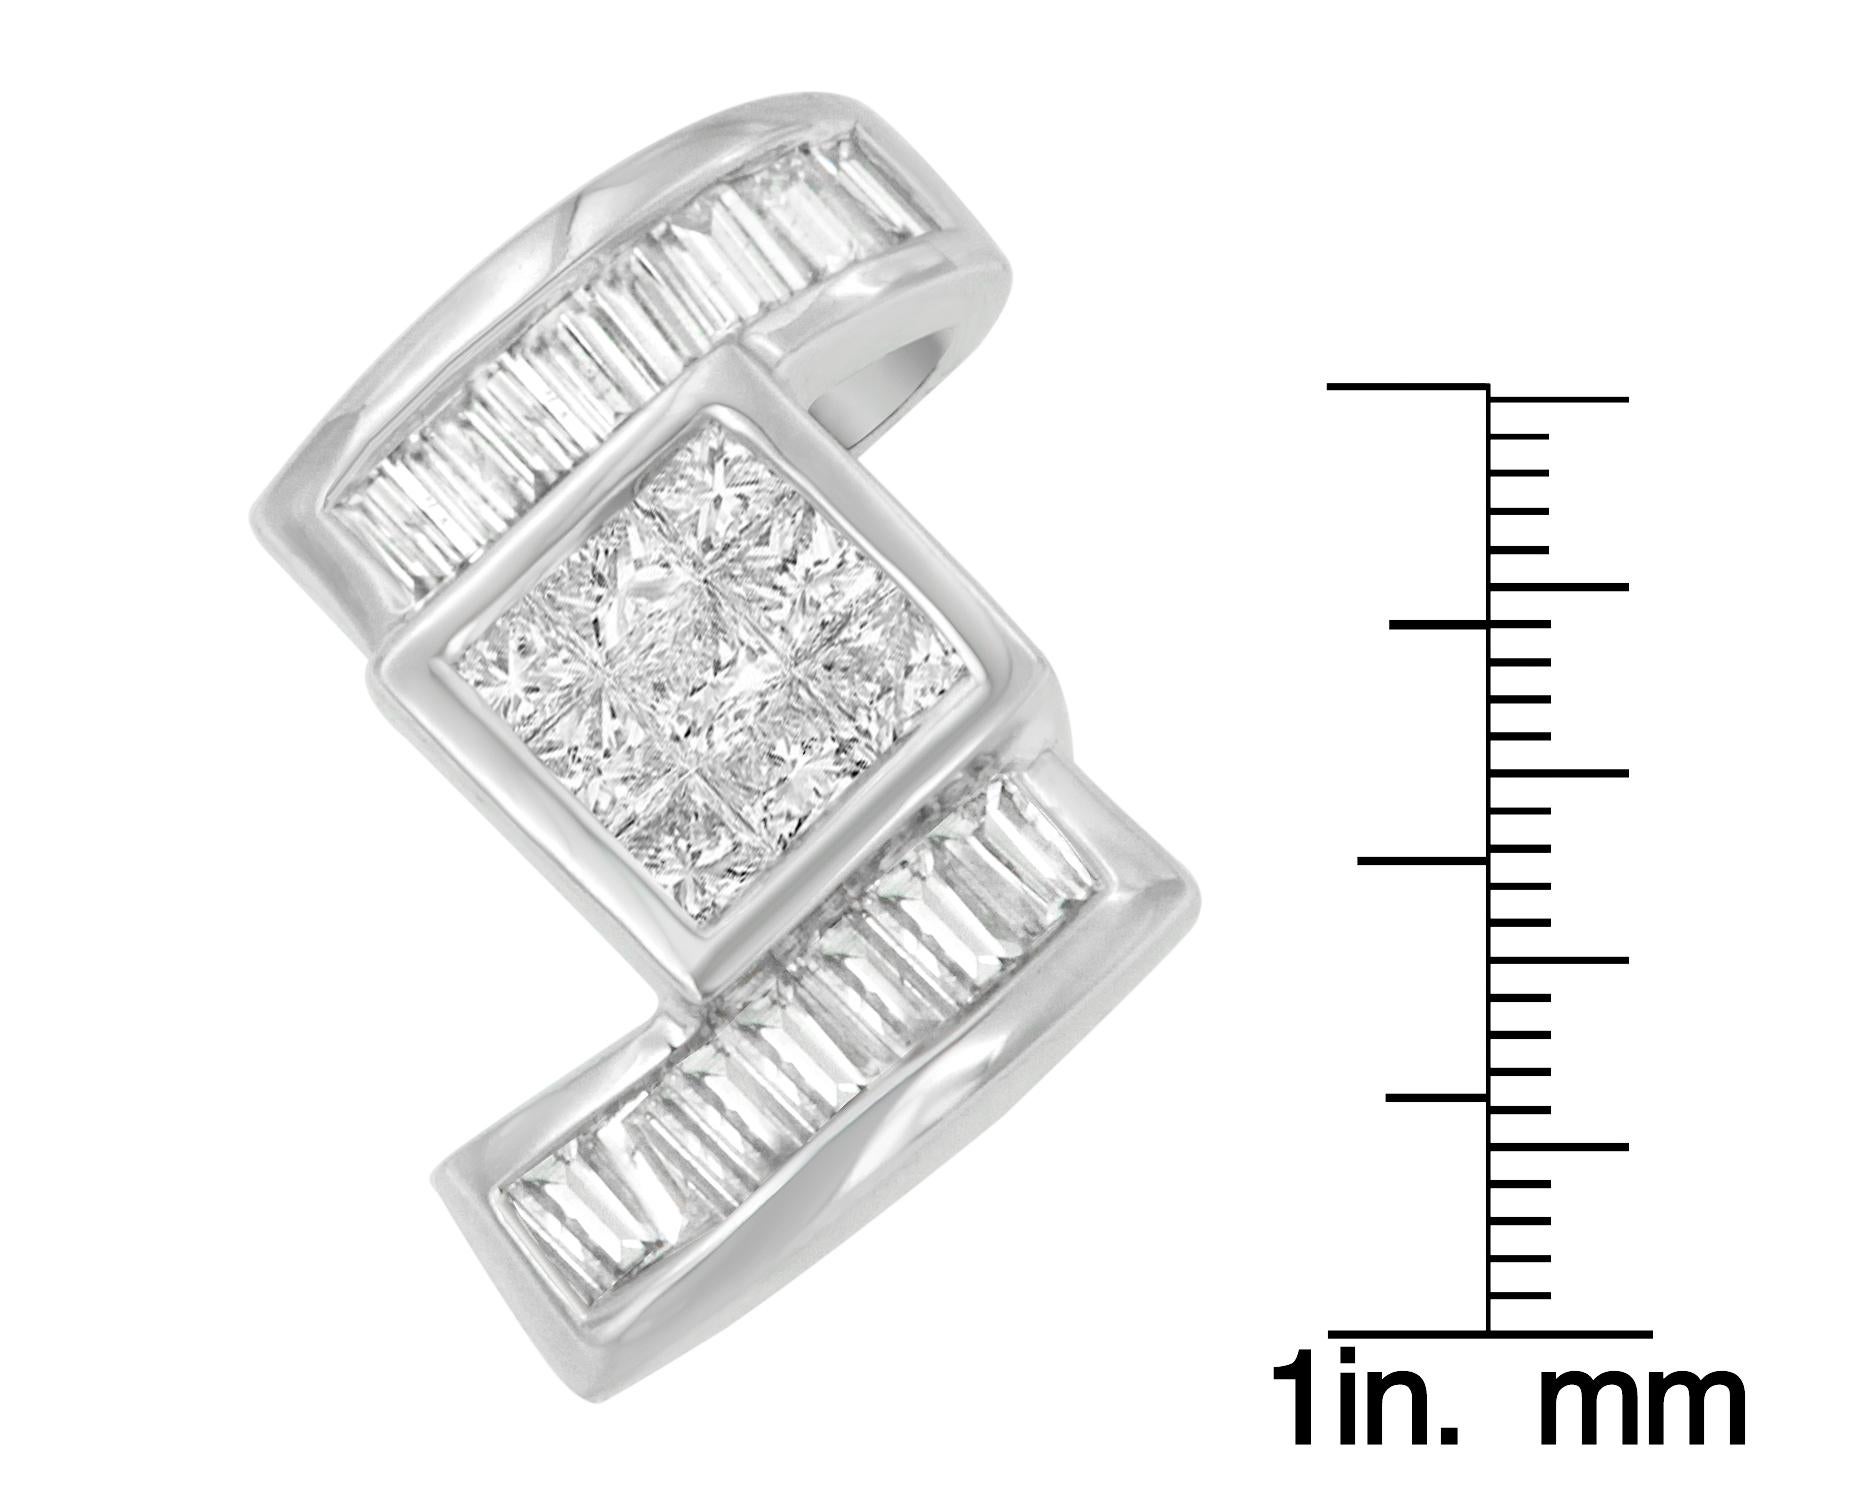 5 carat diamond pendant